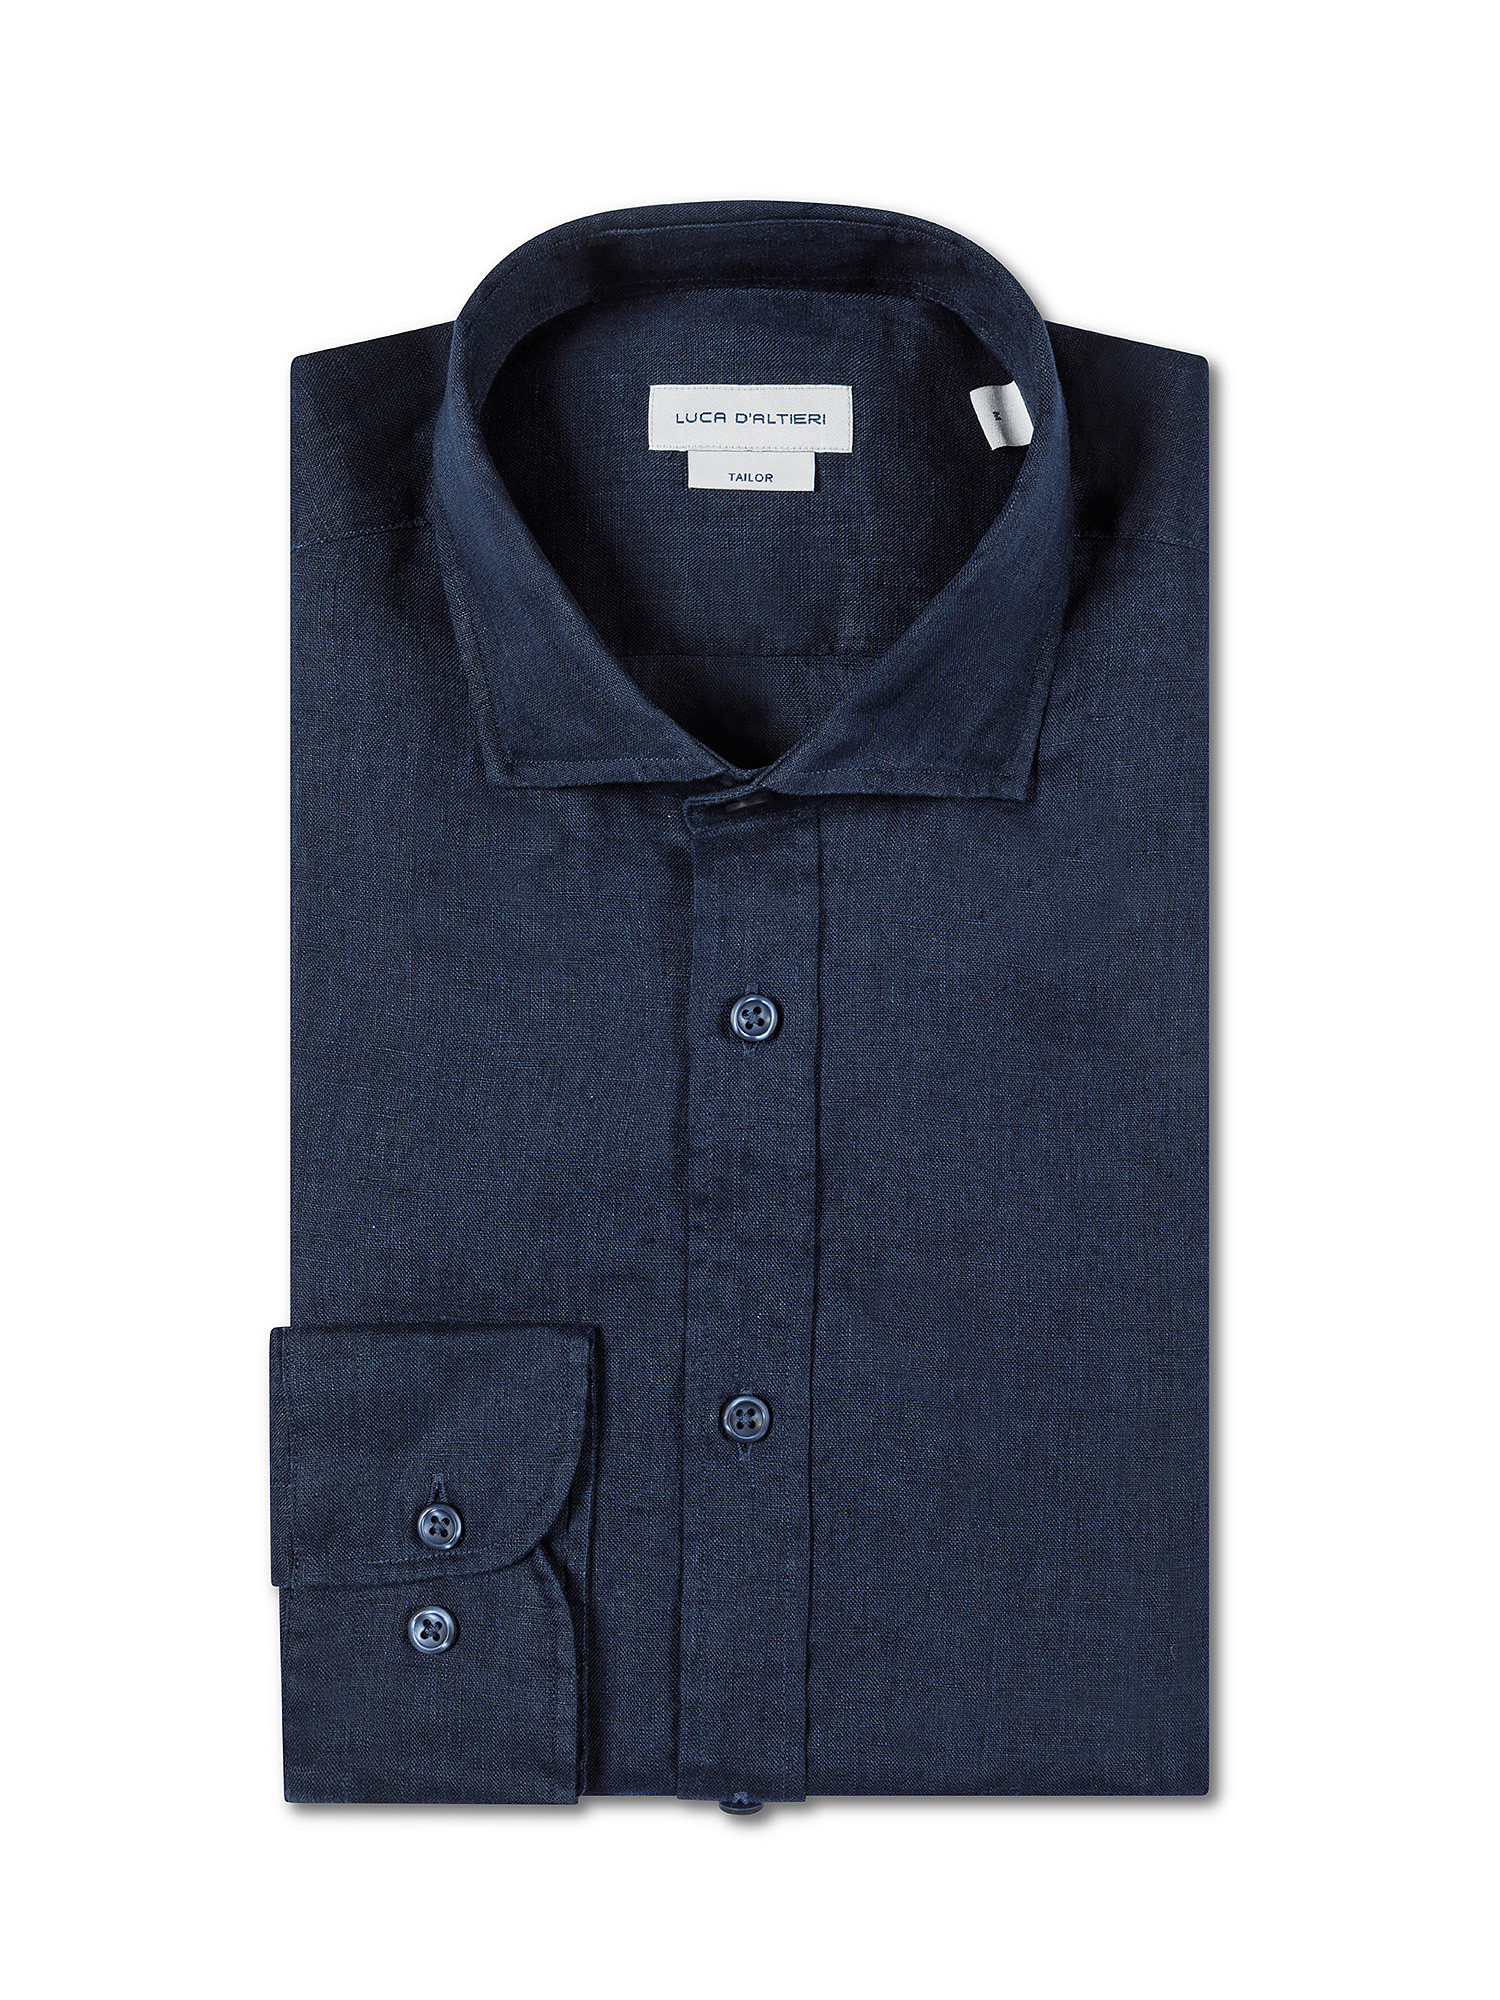 Luca D'Altieri - Tailor fit shirt in pure linen, Dark Blue, large image number 2